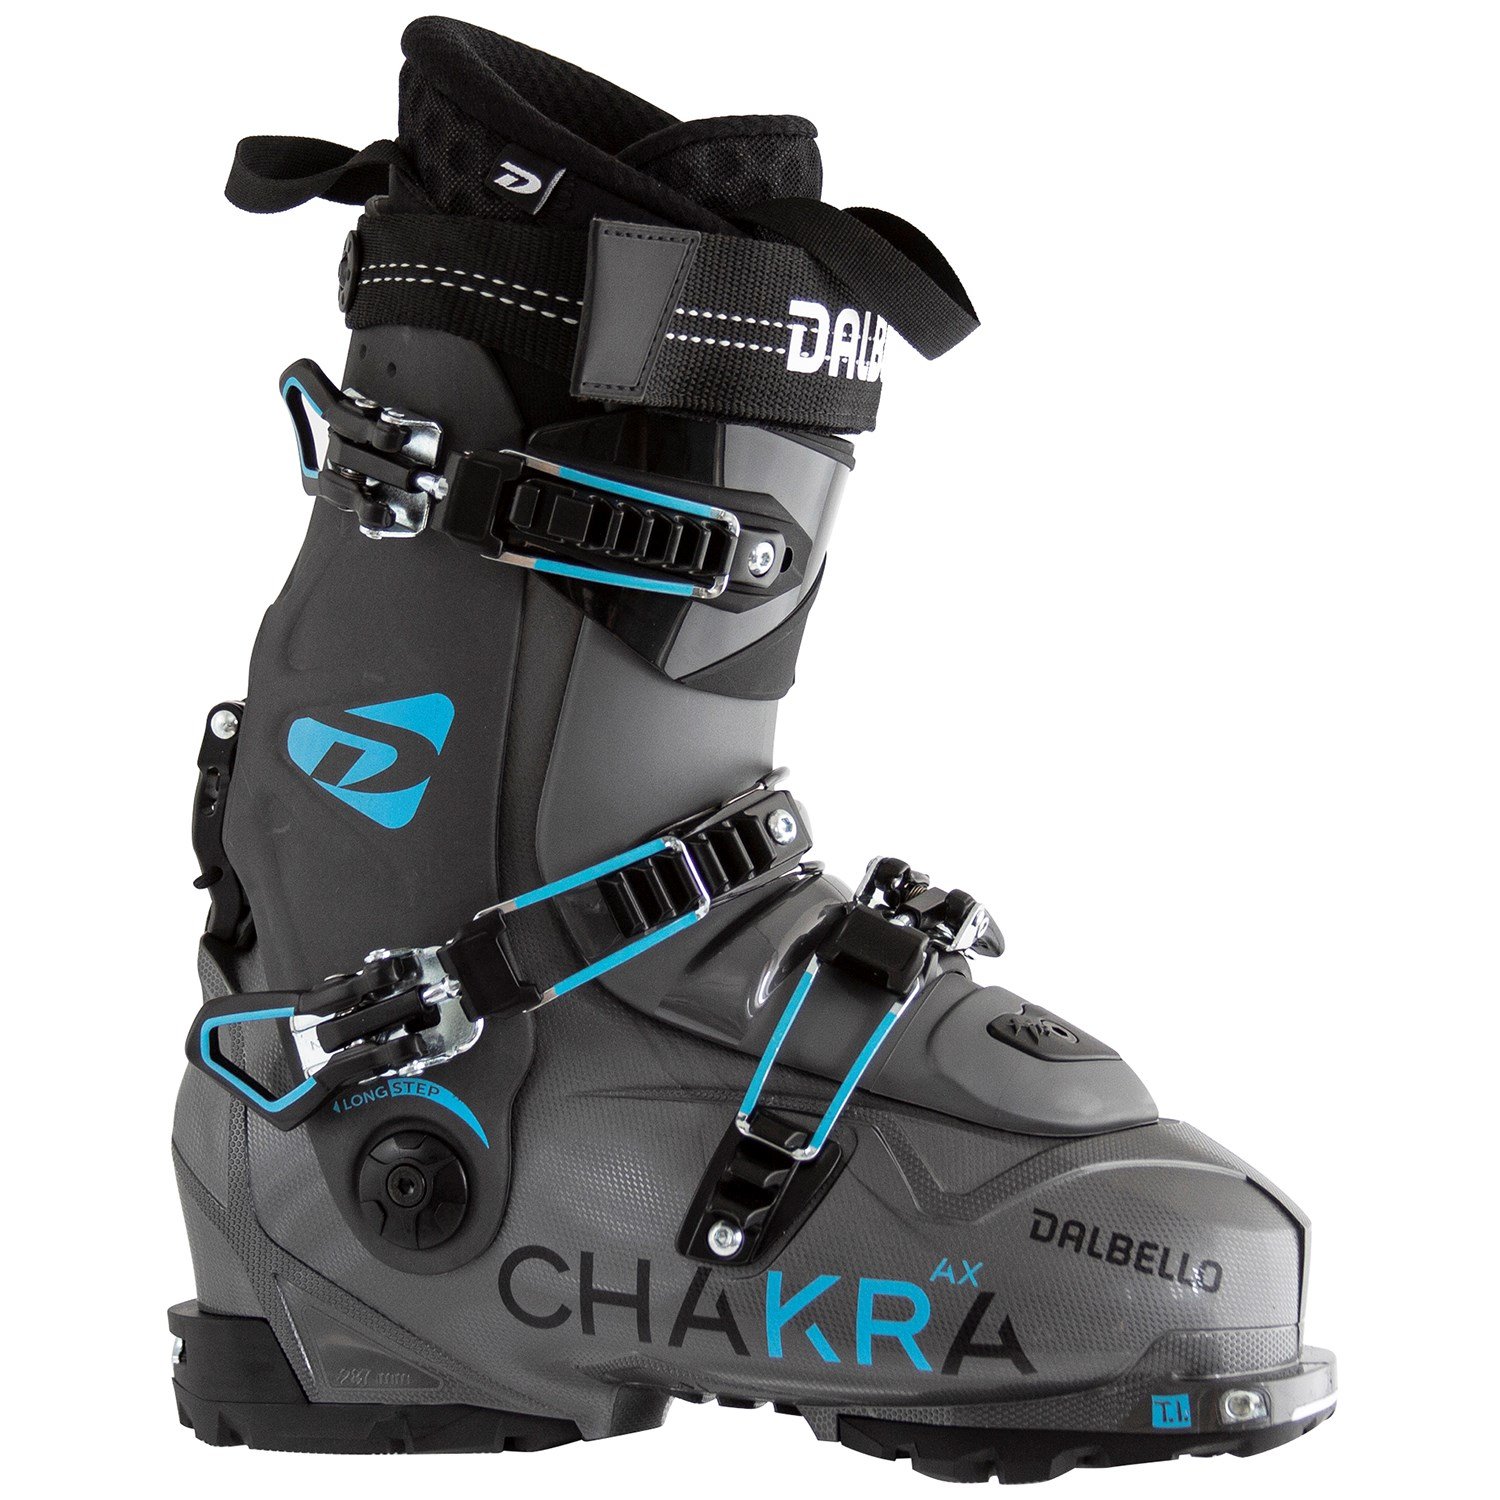 Горнолыжные ботинки Dalbello Chakra AX T.I. Alpine Touring, серый